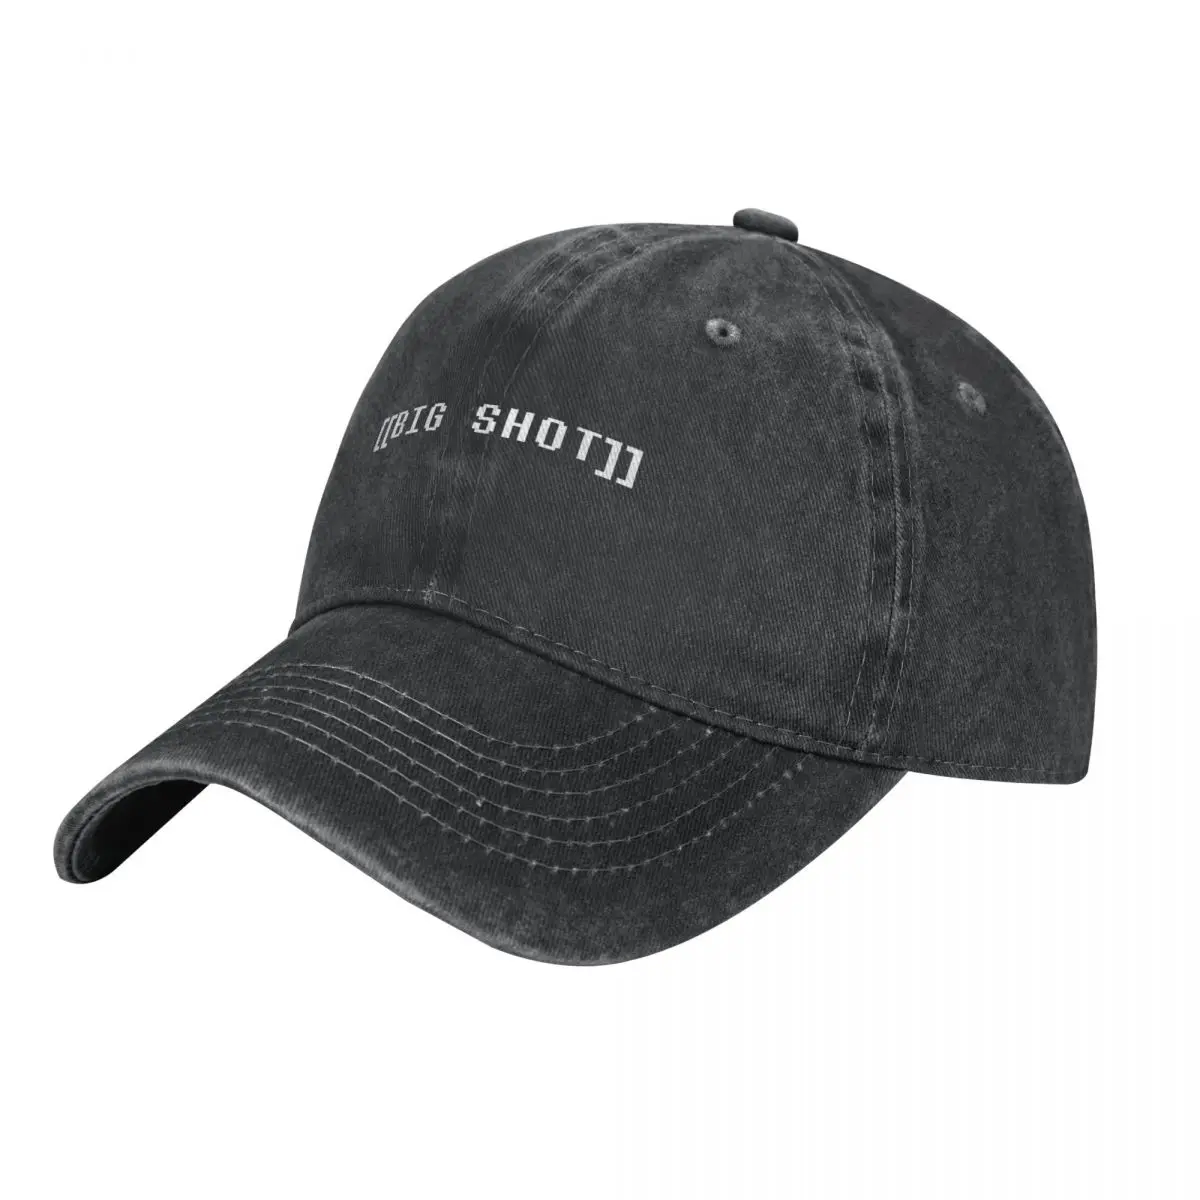 

[[BIG SHOT]] Cowboy Hat Hat Luxury Brand Sunhat Sports Cap |-F-| Trucker Hats For Men Women's